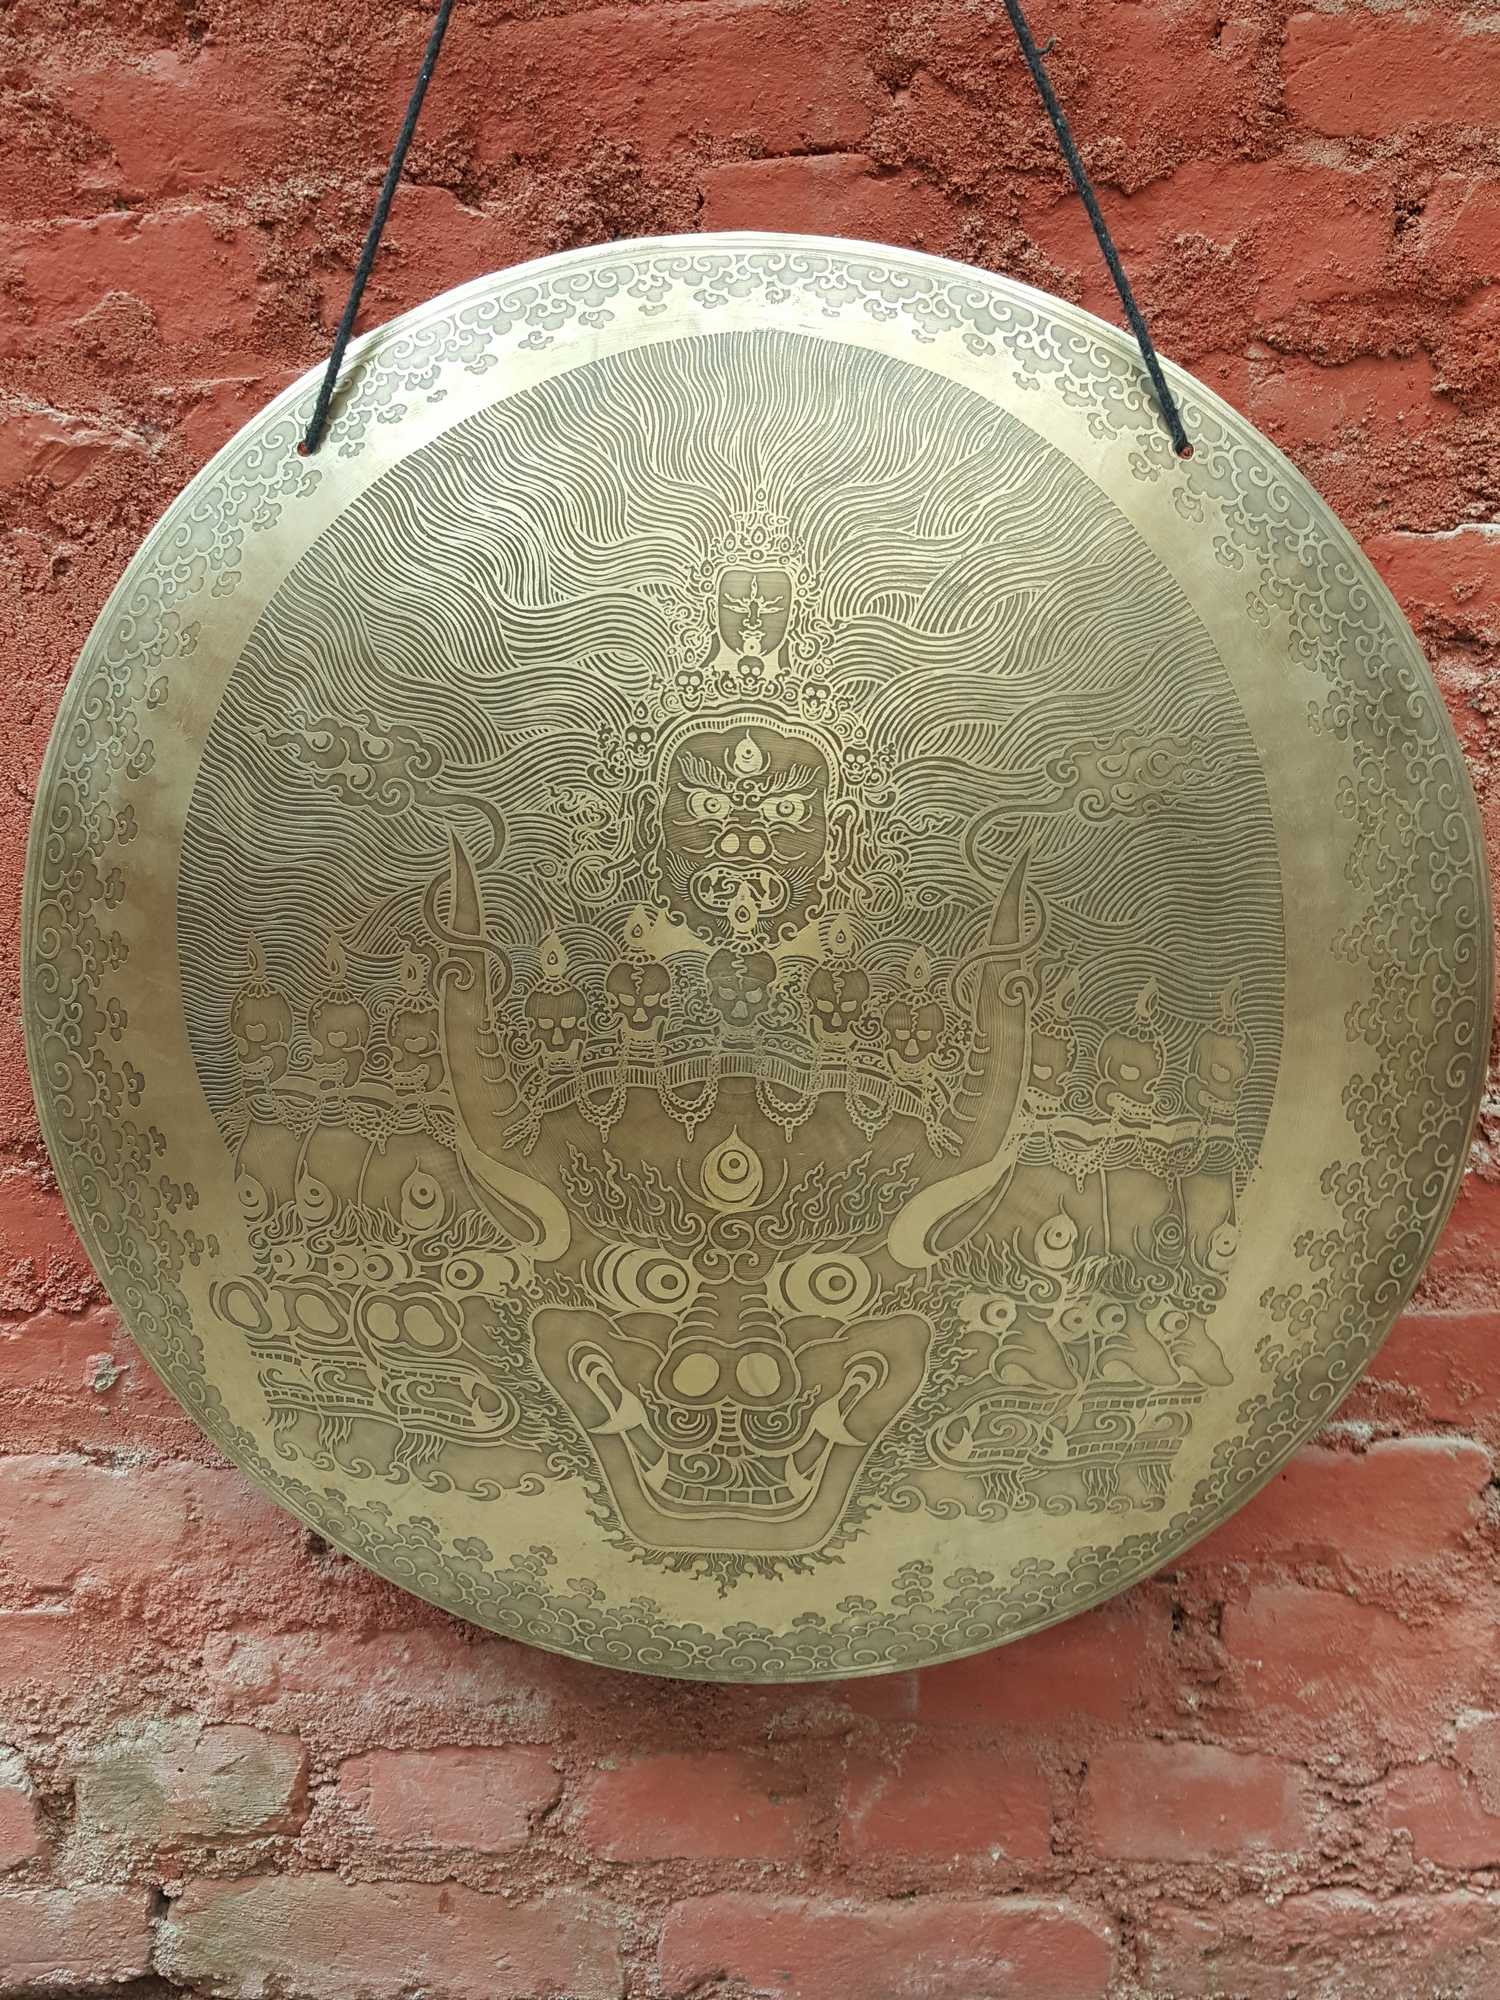 Tibetan Flat Gong, With yamantaka Vajrabhairava- Heruka Head Design, Wind Gong, Flat Gong